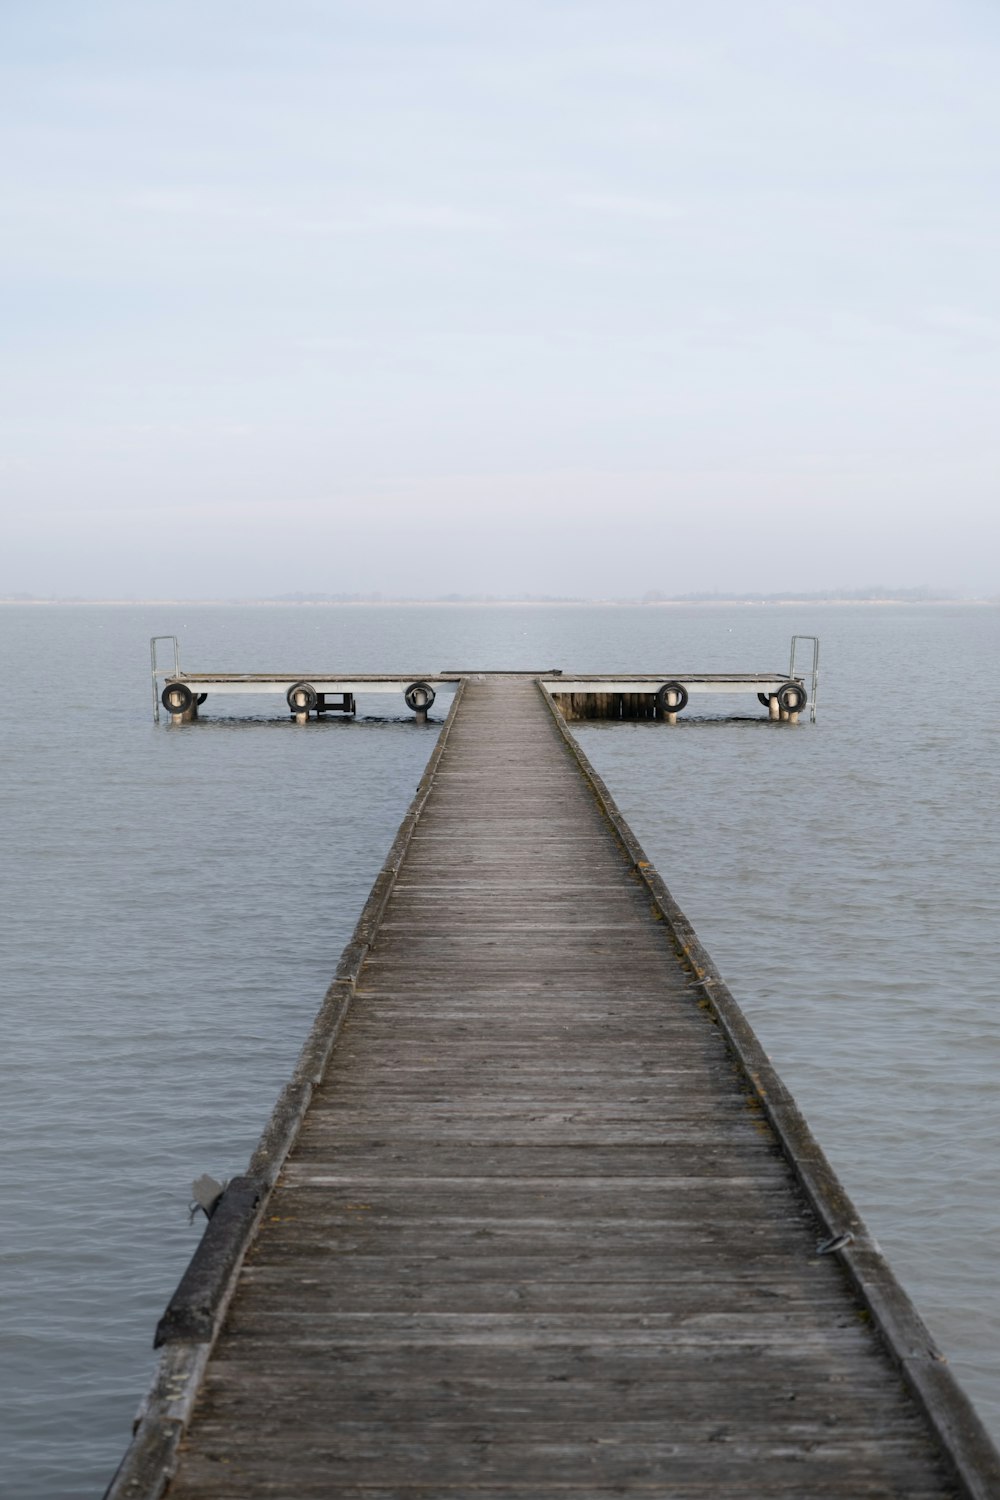 a long pier extending out into the ocean